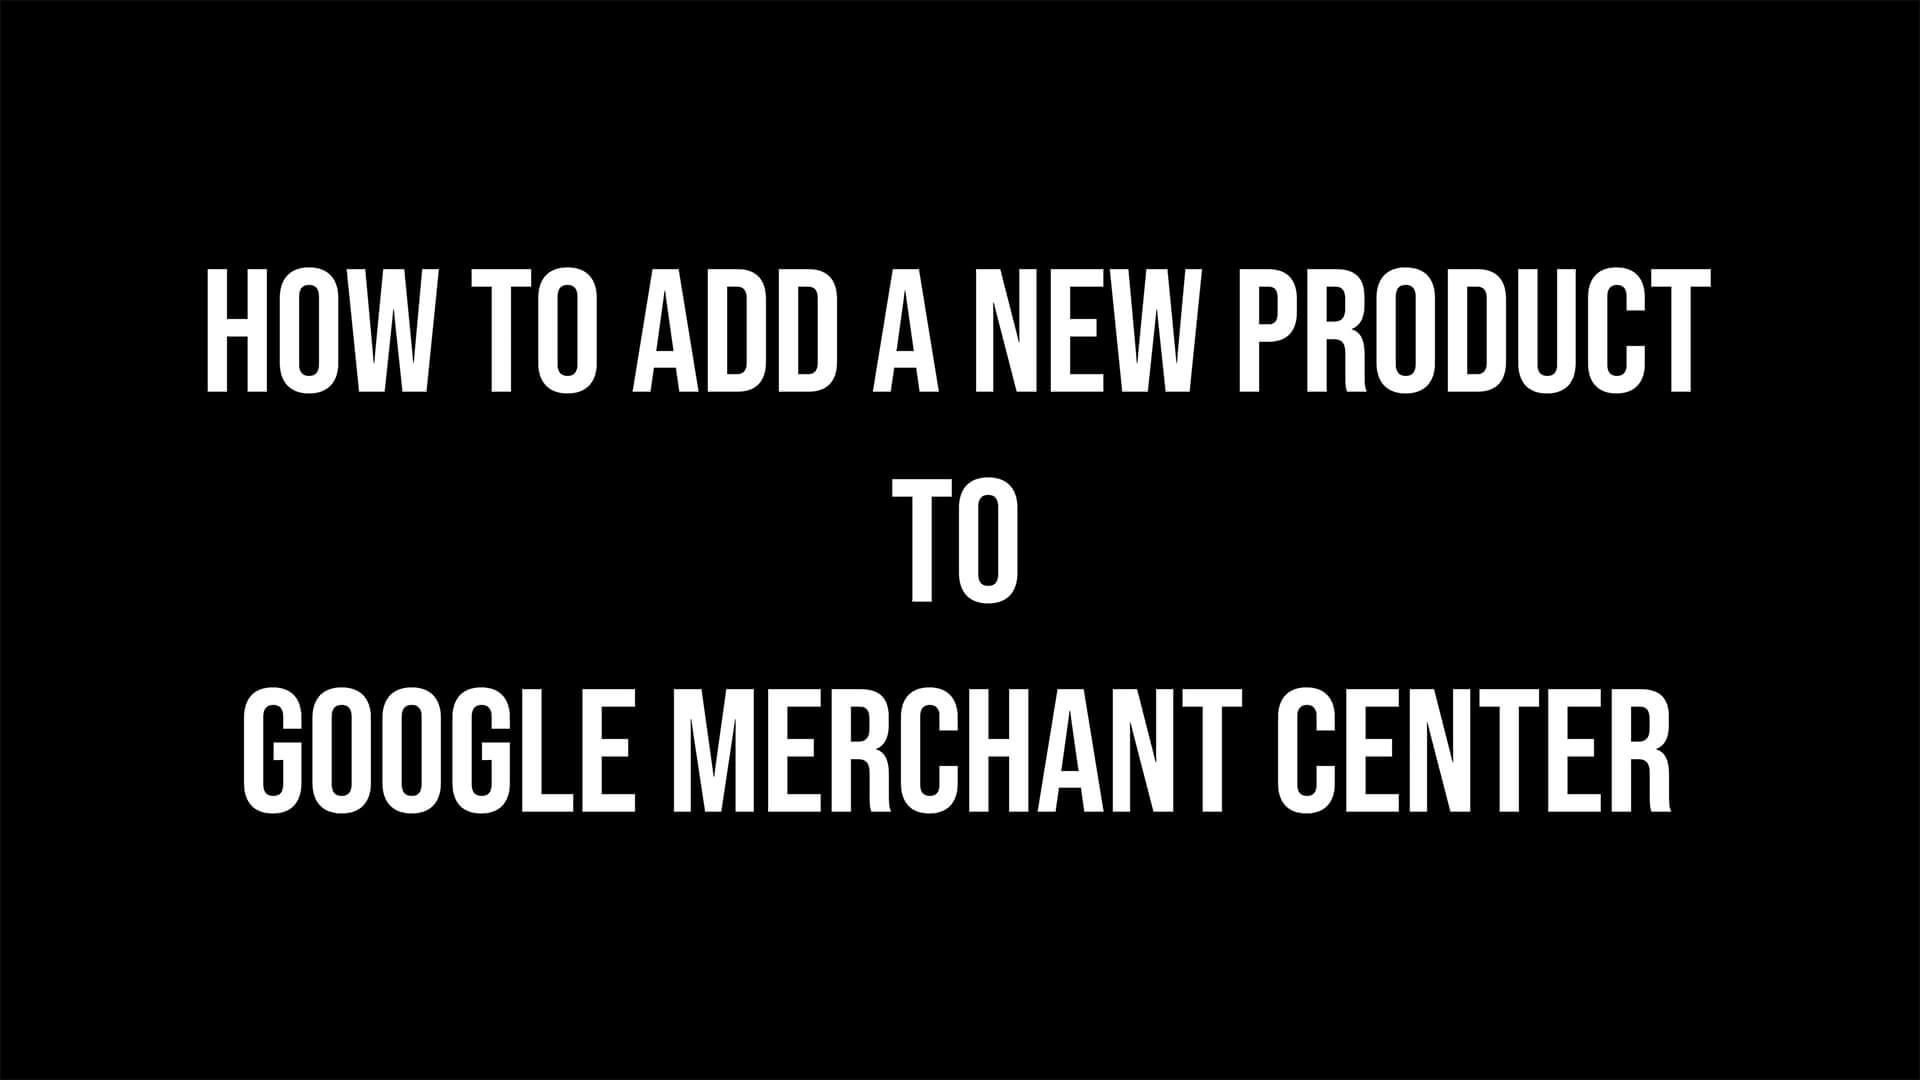 Google Merchant Center How-To-Add-A-New-Product-On-Google-Merchant-Center-Tutorial